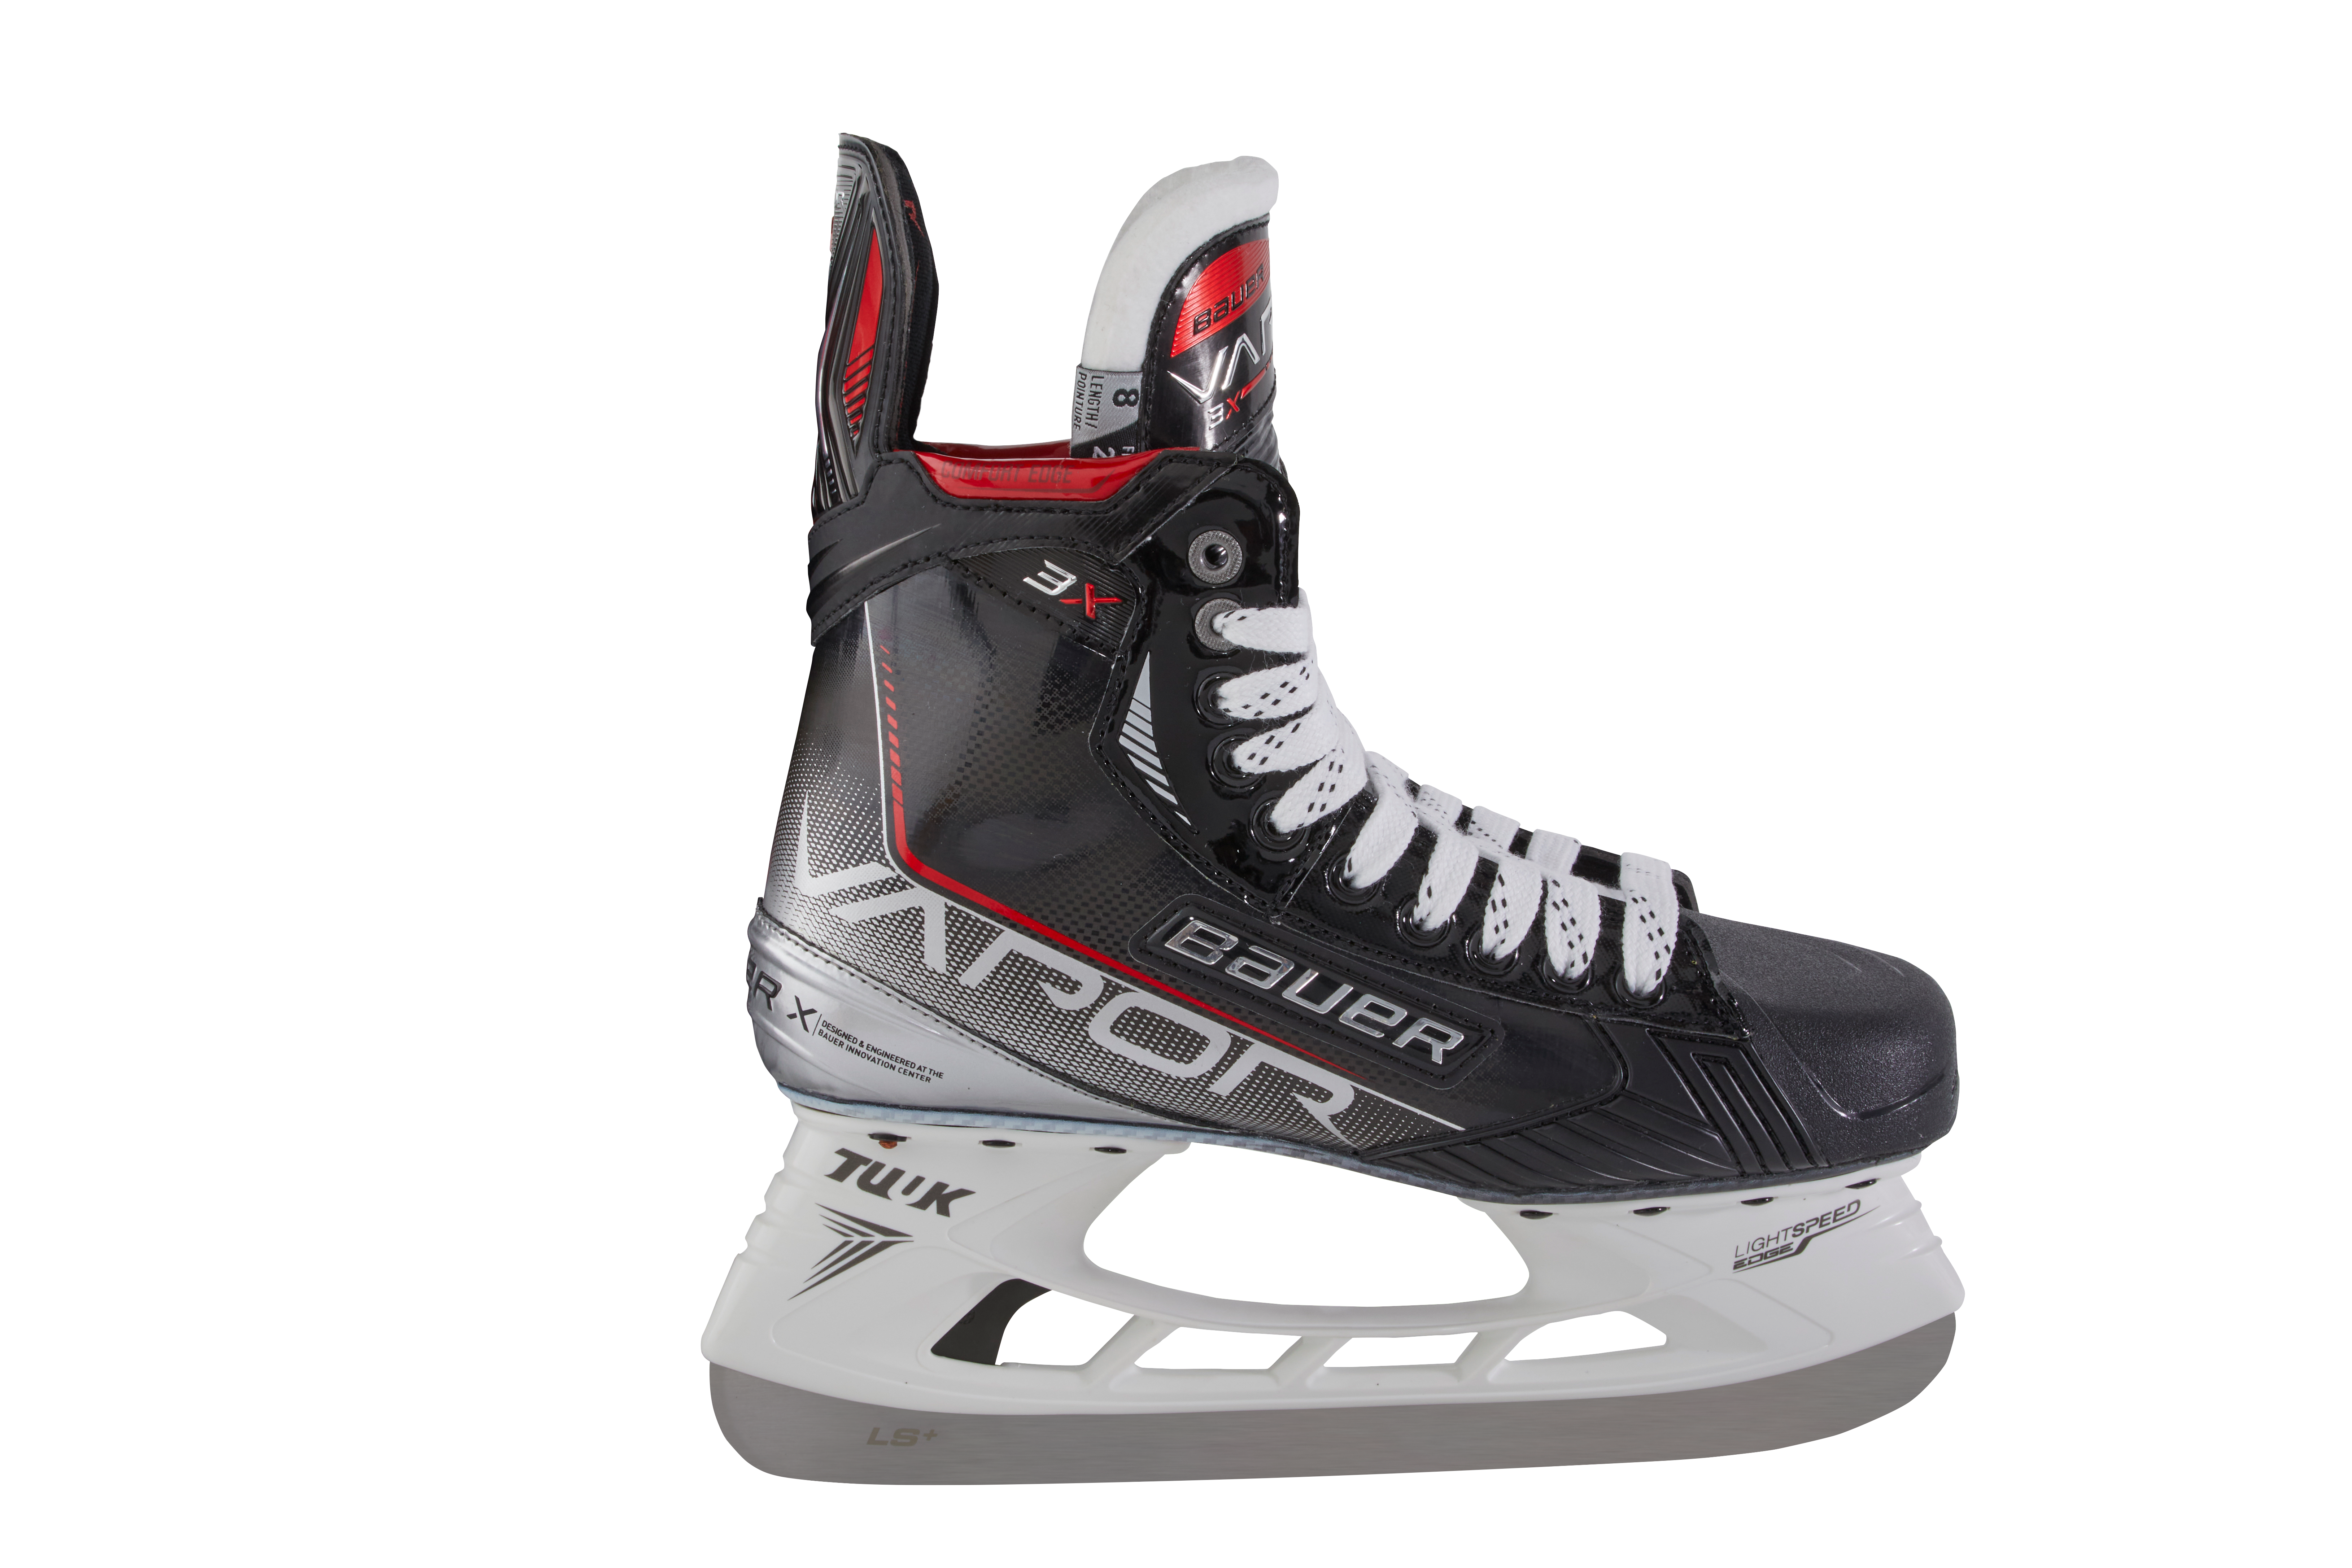 Hysterisch elektrode Voorlopige naam Bauer vapor 3x ijshockey schaatsen · Henrys Sportshop